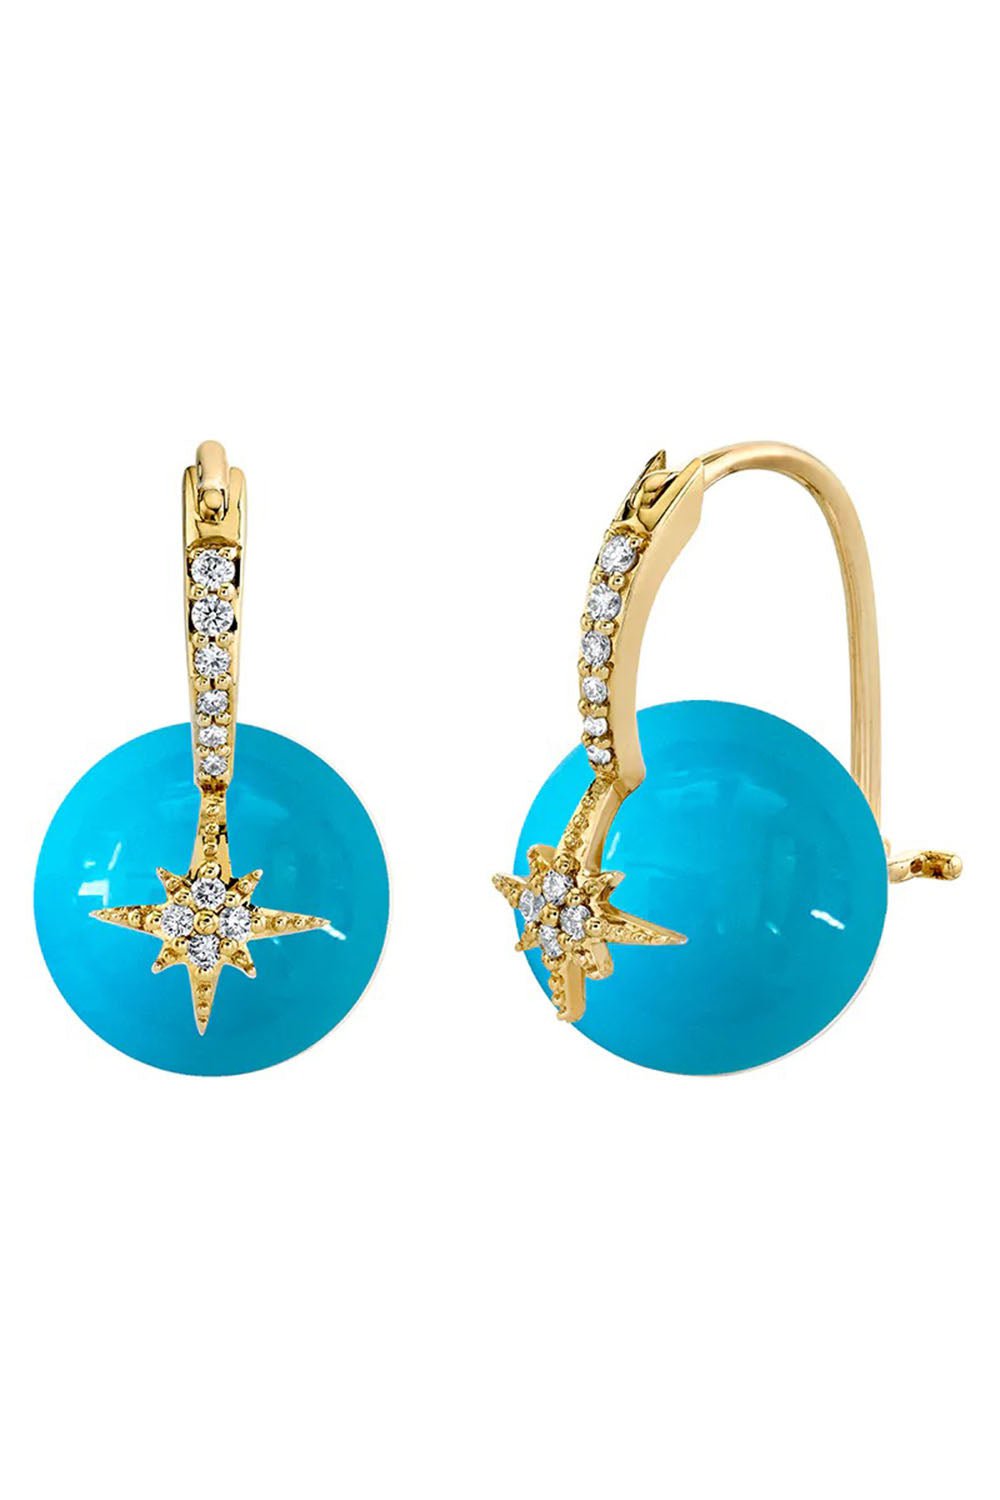 SYDNEY EVAN-Starburst Turquoise Bead Earrings-YELLOW GOLD